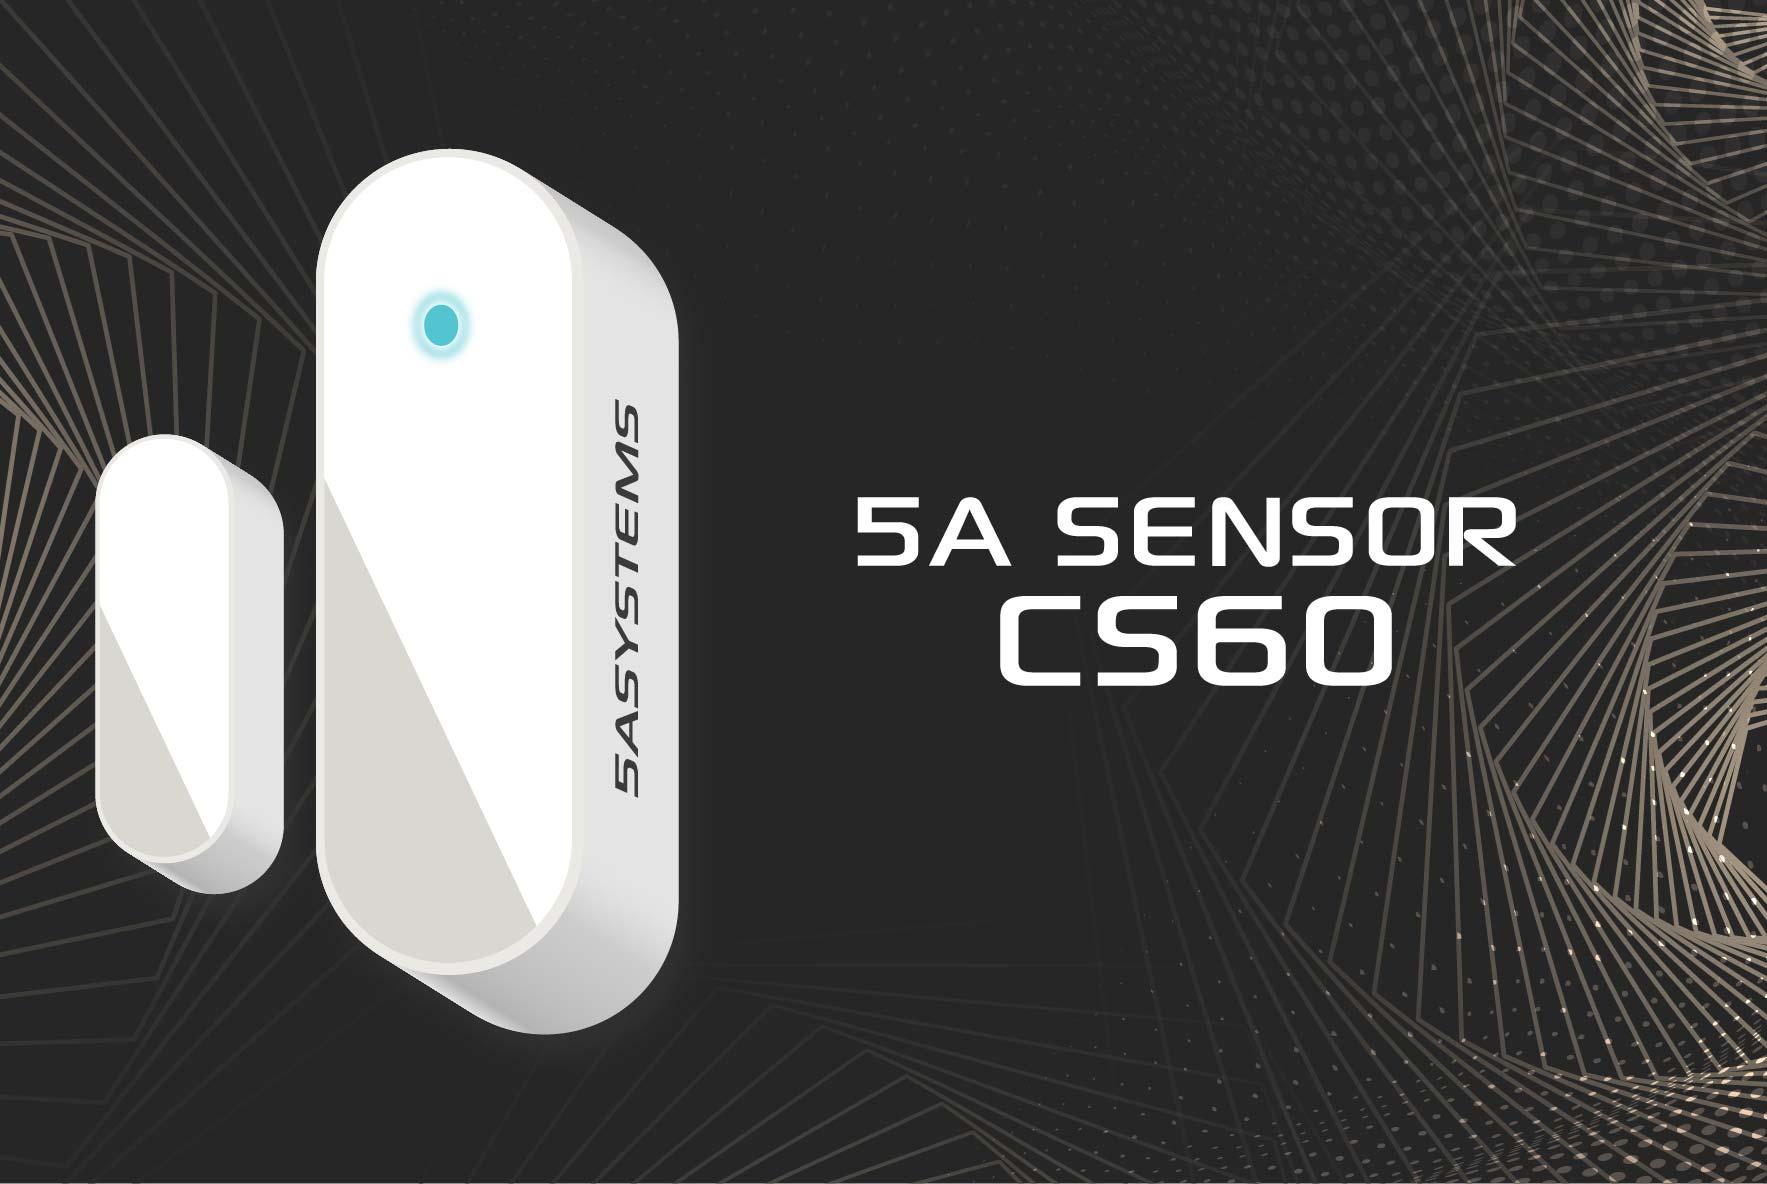 Thiết bị cảm biến cửa thông minh 5A Sensor CS60